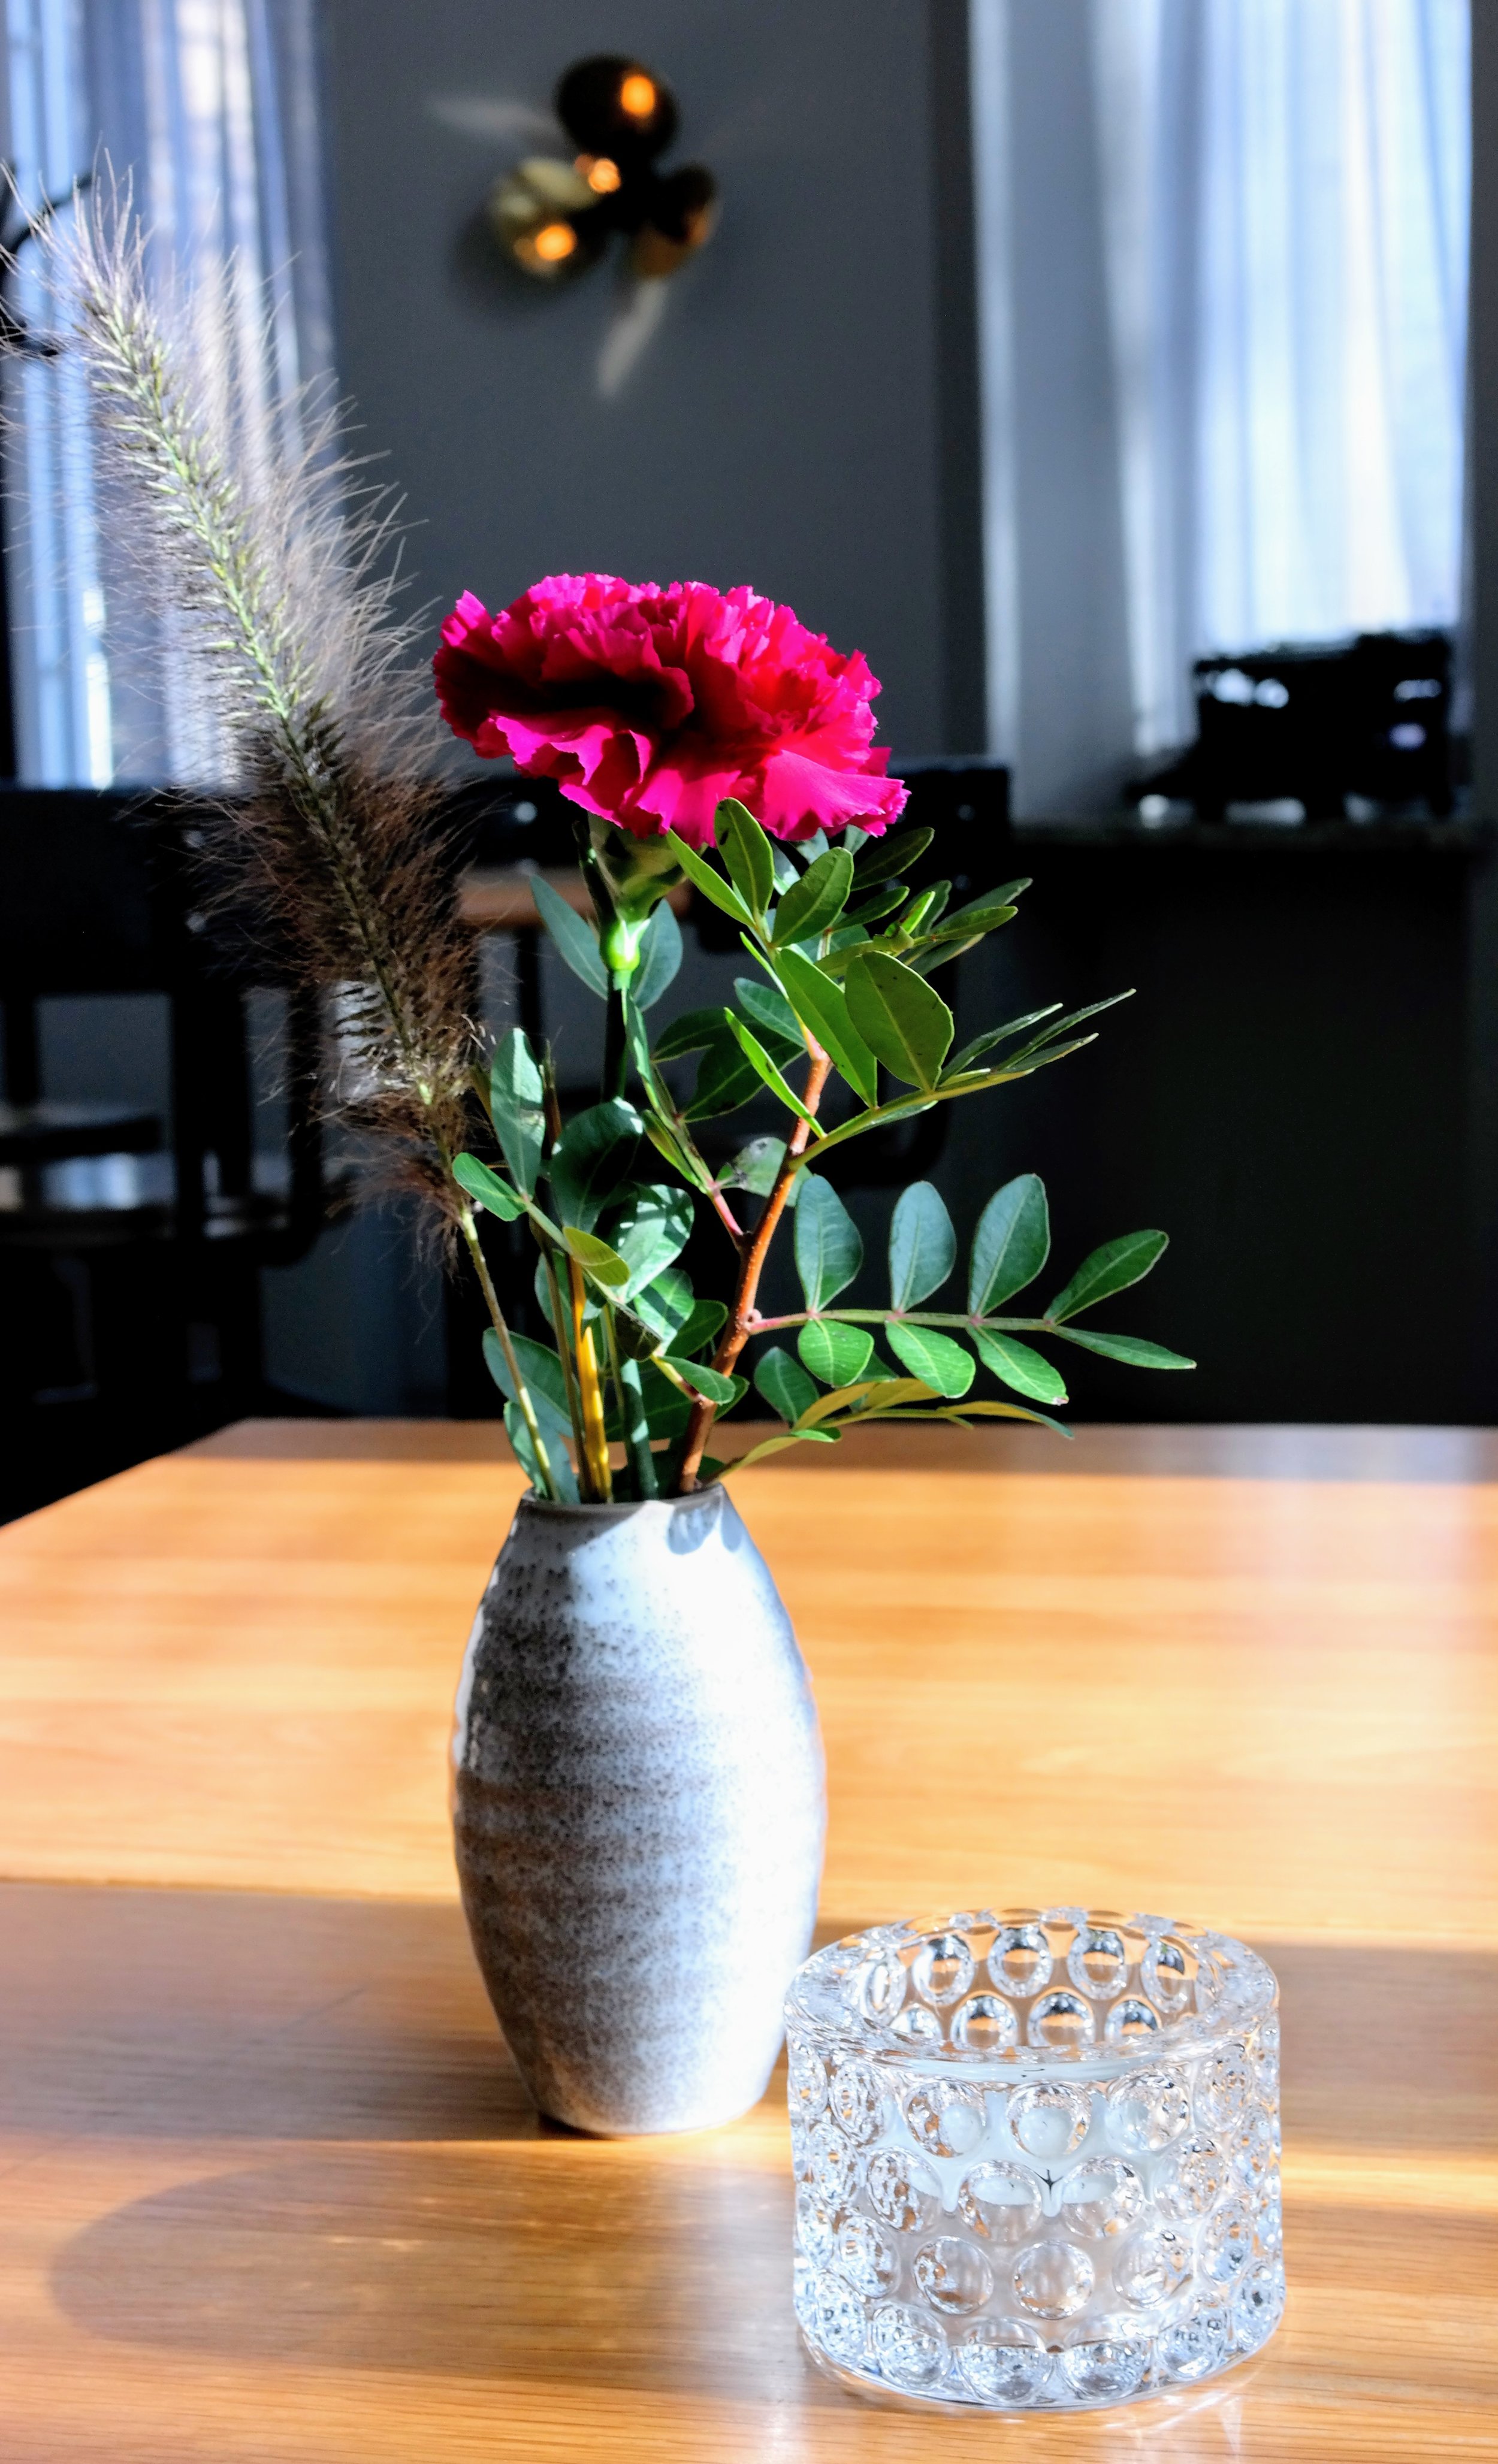 Blommig dekoration på bordet